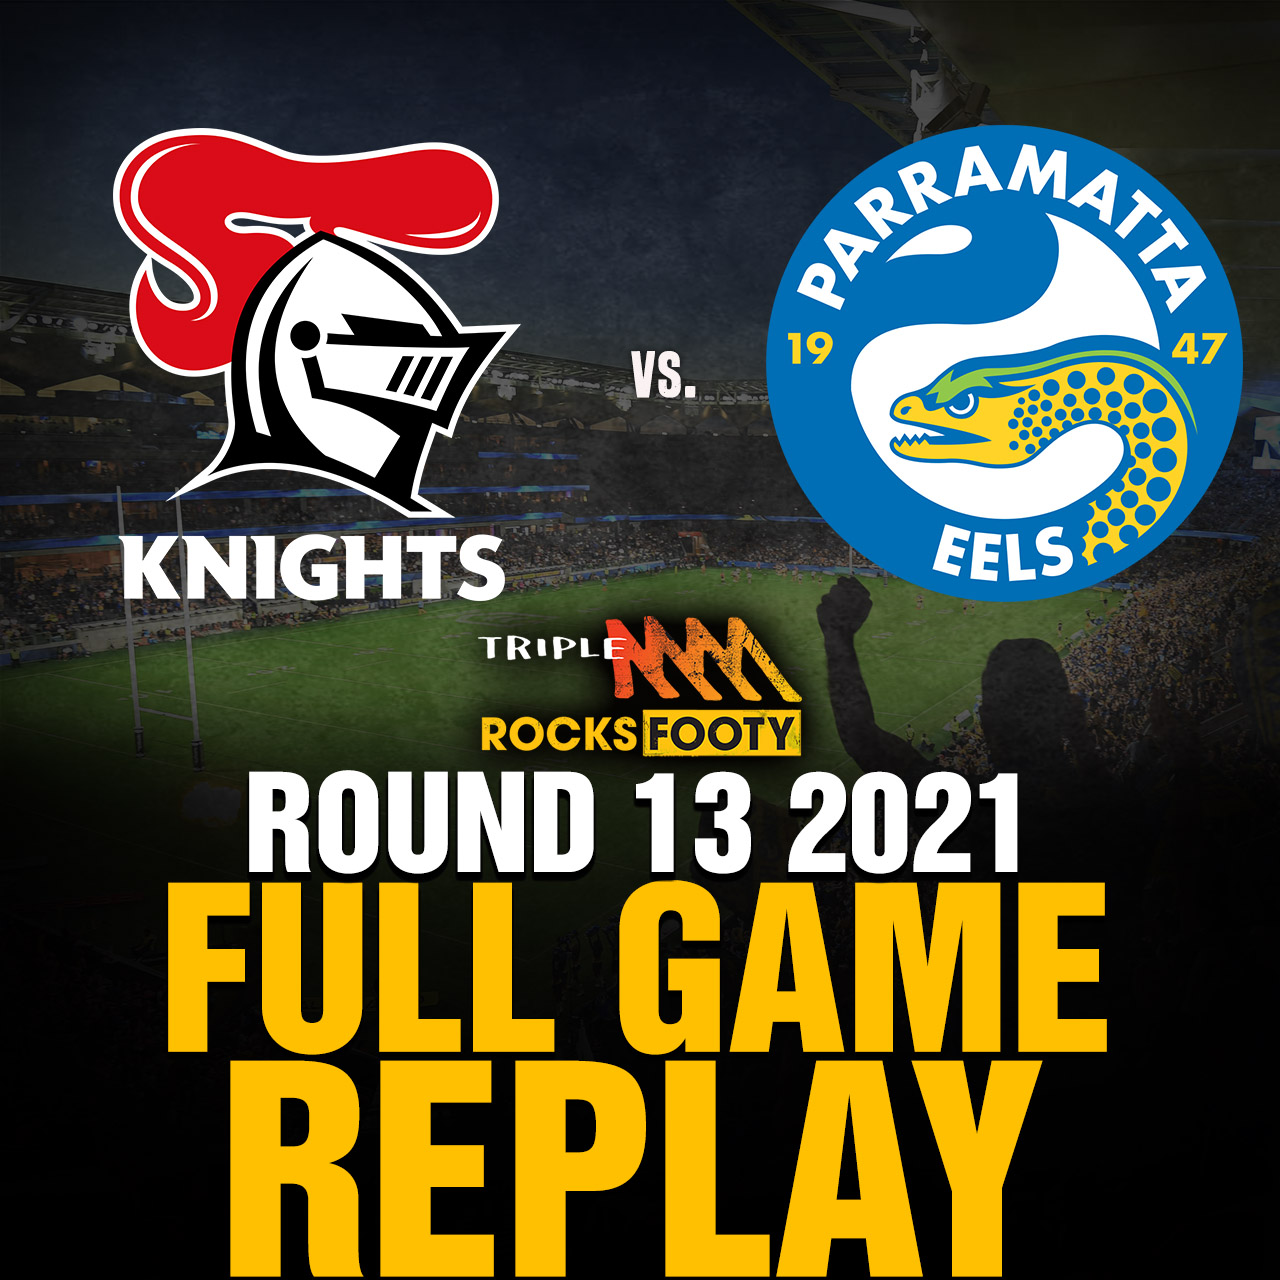 FULL GAME REPLAY | Newcastle Knights vs. Parramatta Eels